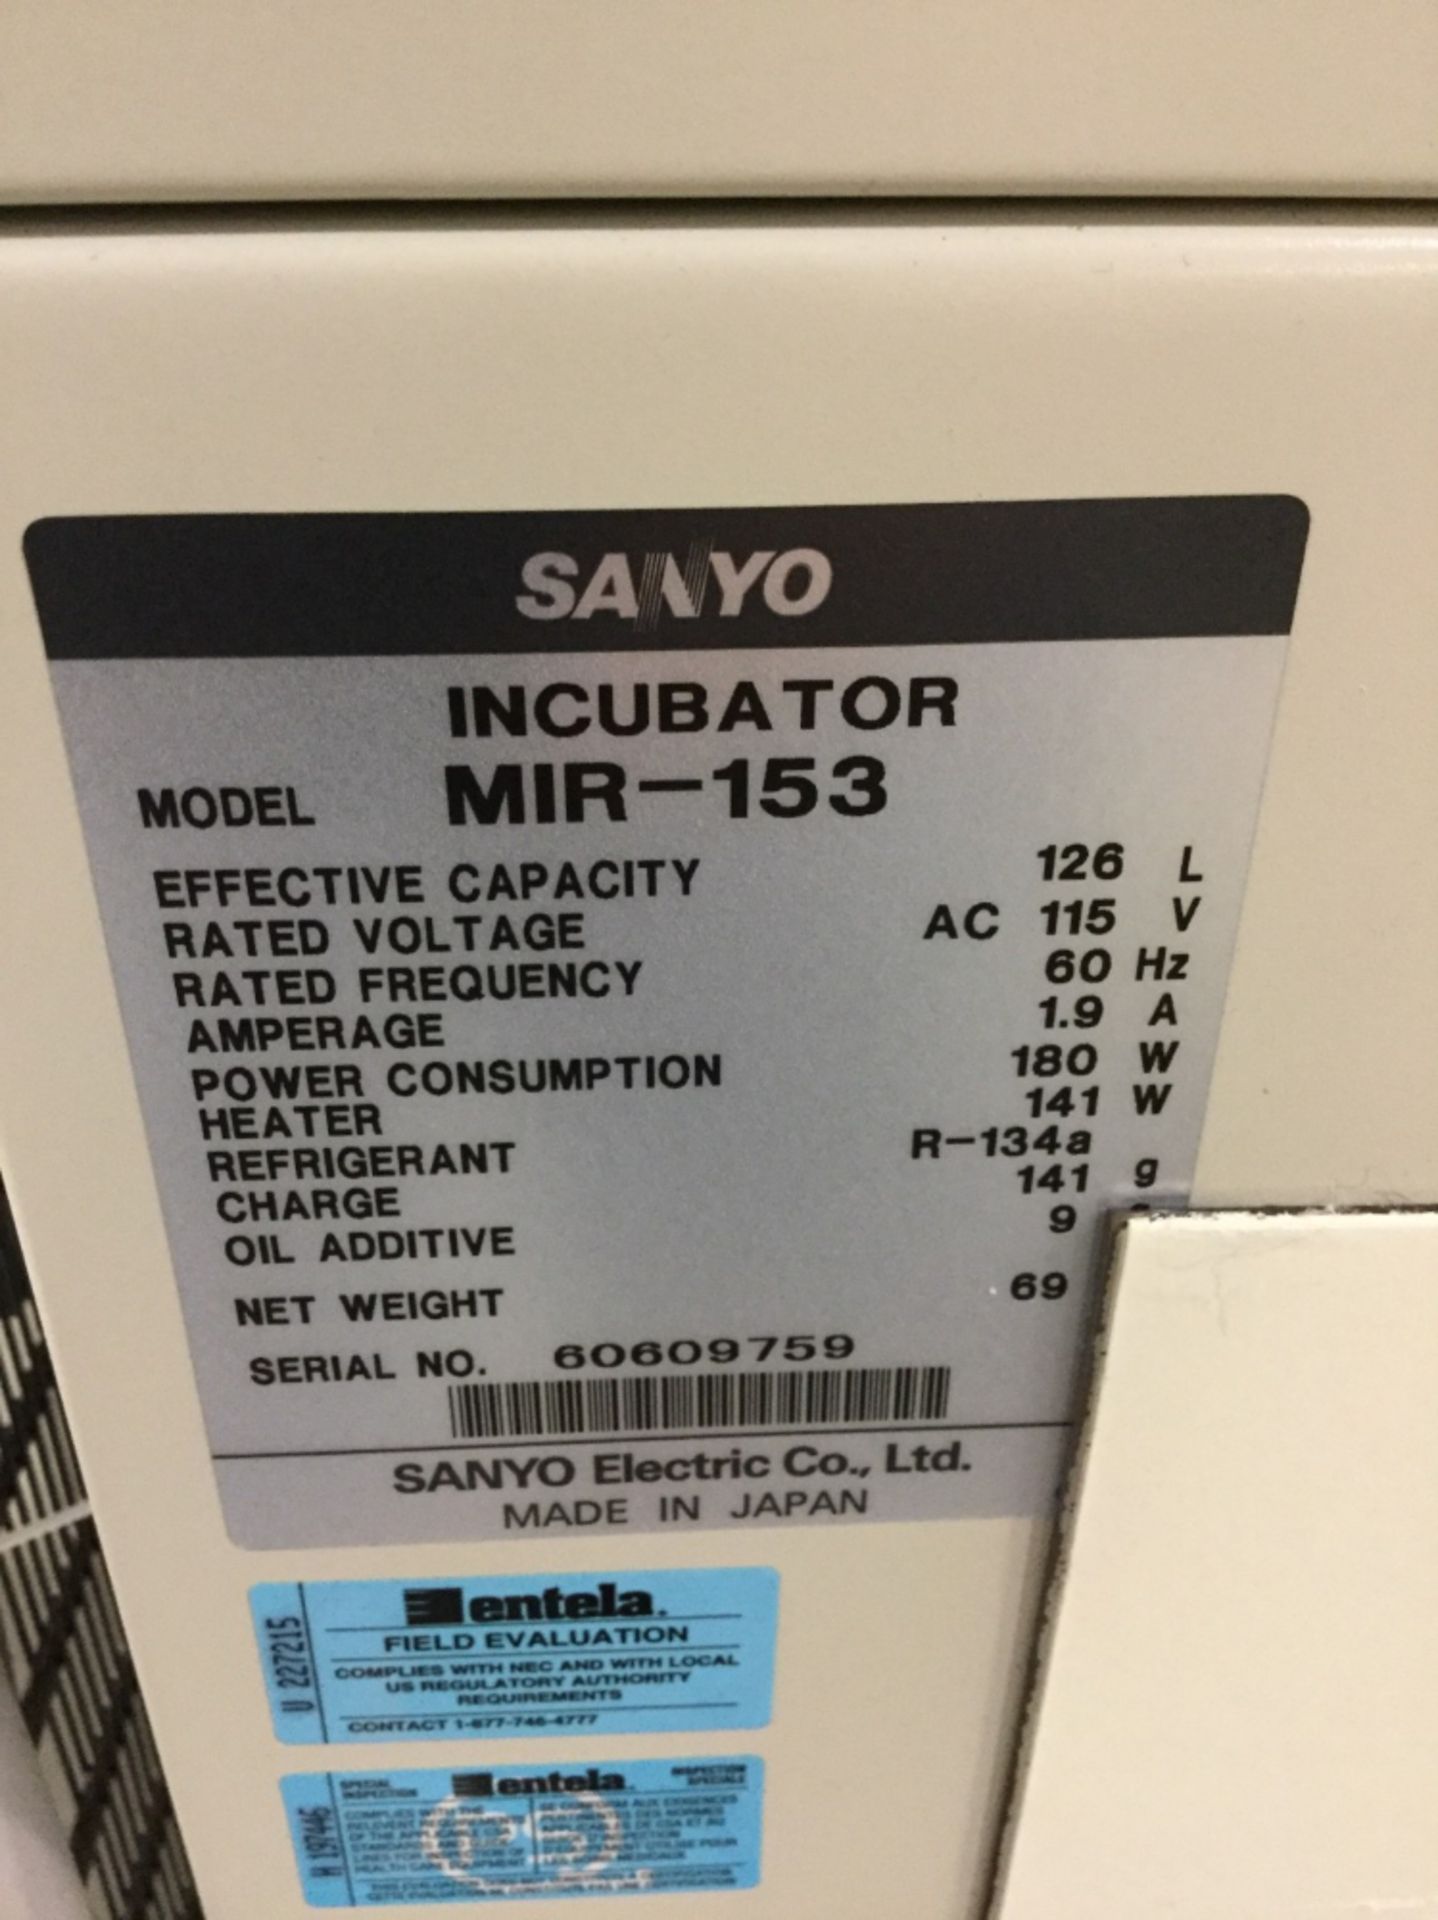 Sanyo MIR-153 Incubator - Image 2 of 3